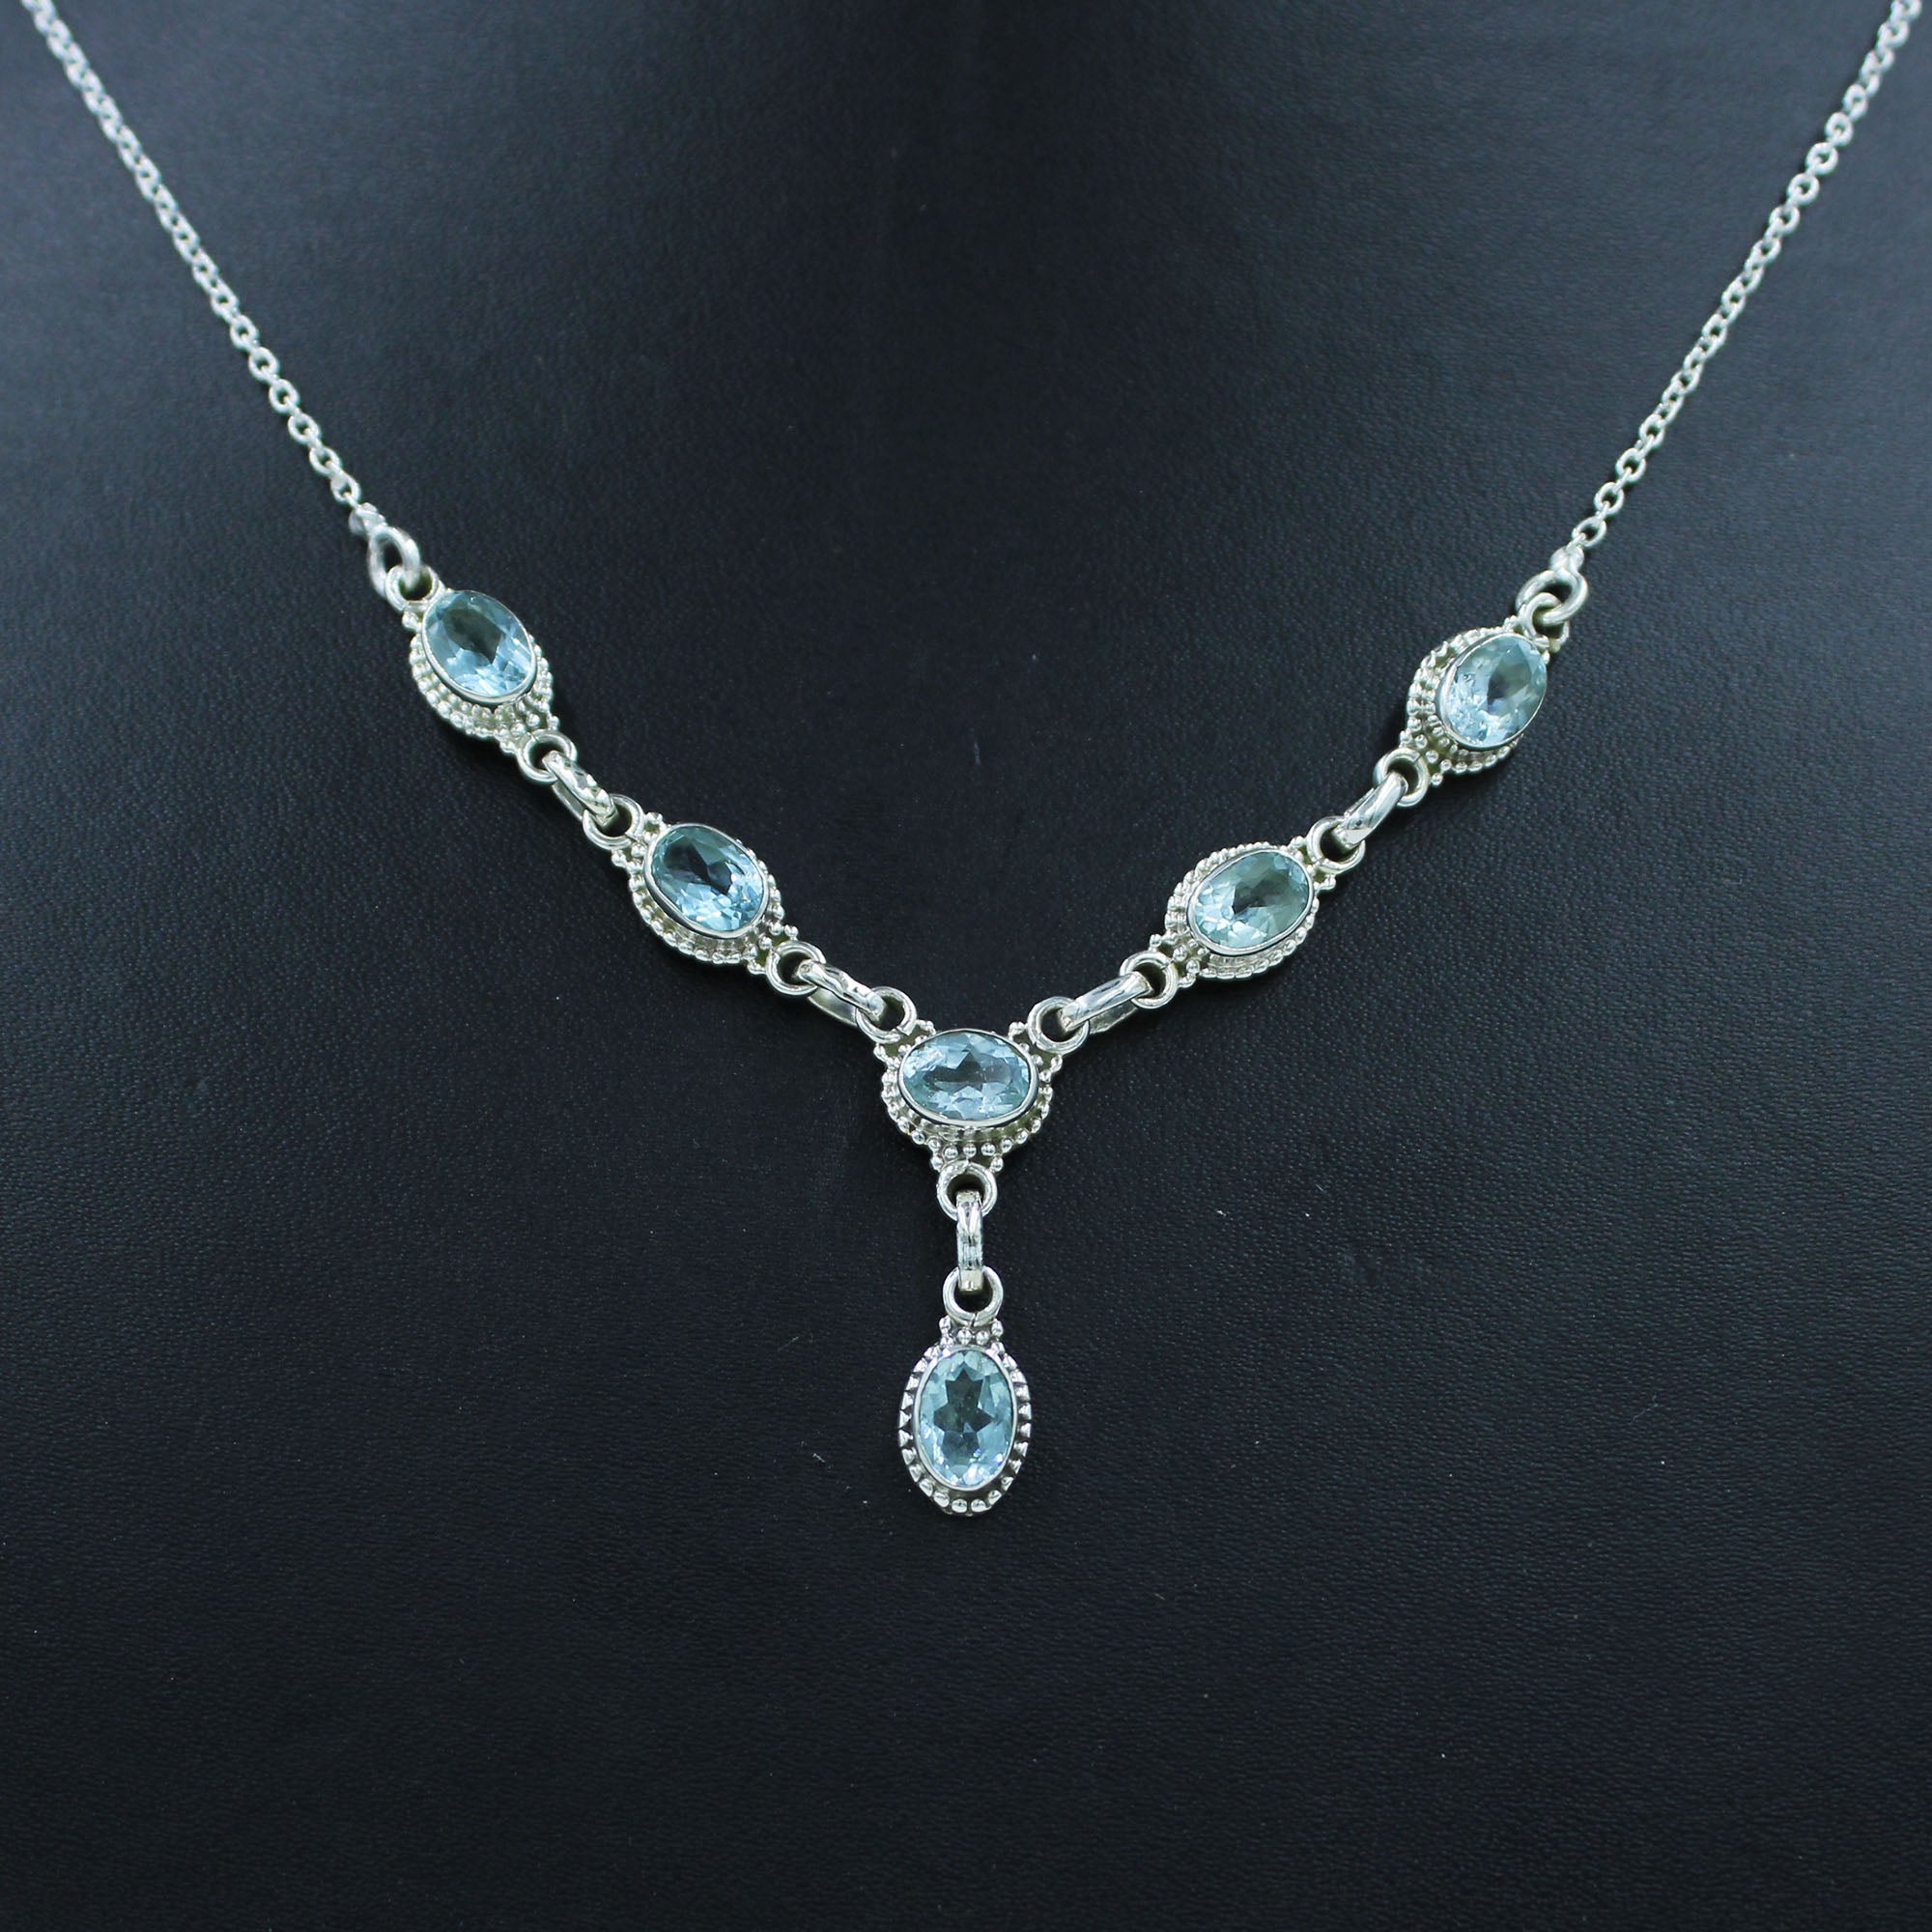 Blue Topaz November Birthstone Jewelry Necklace